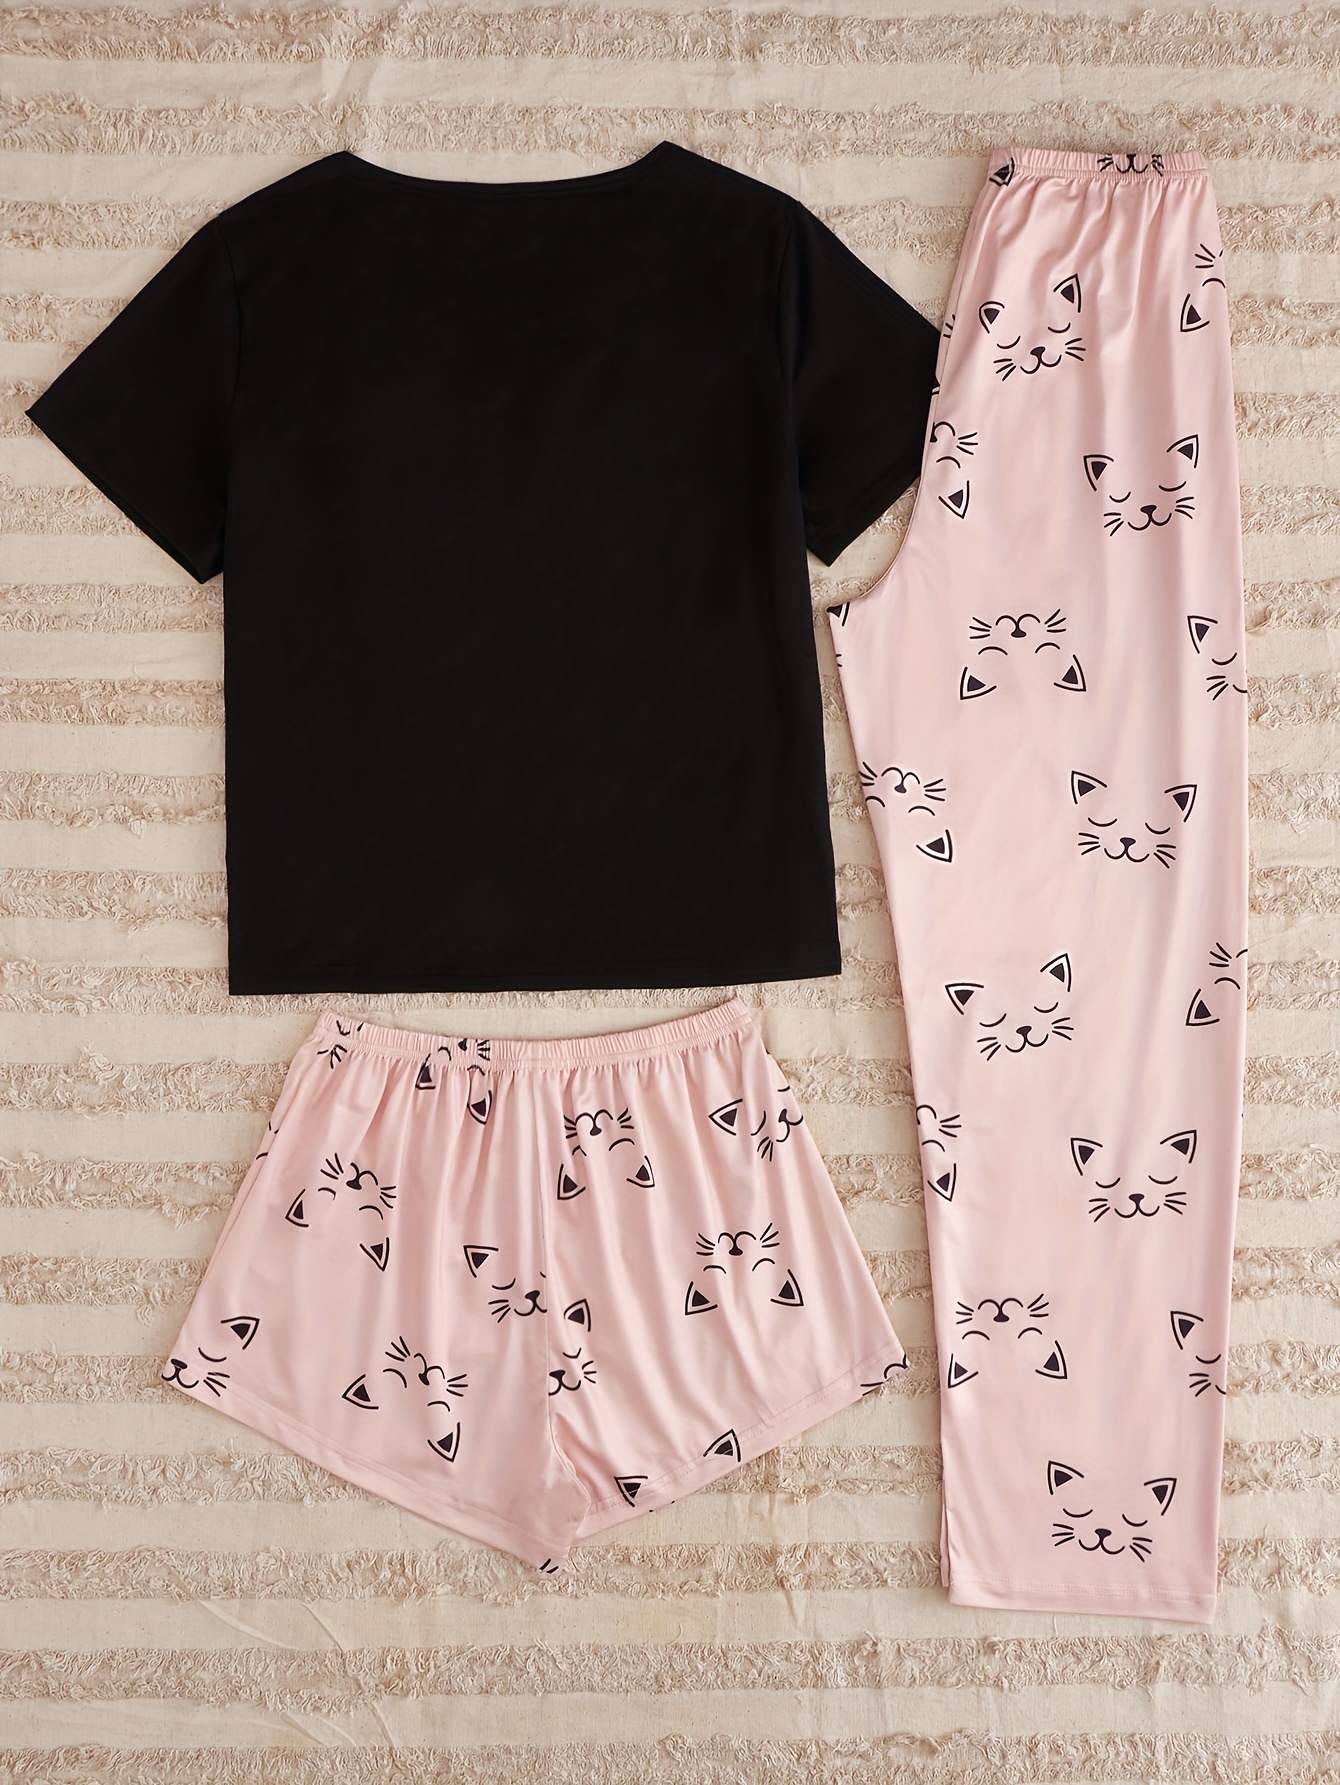 Women's Cute Pajamas Set Cat Print Casual Sleepwear Fashion Short Sleeve  Top + Shorts Femmes Pyjamas